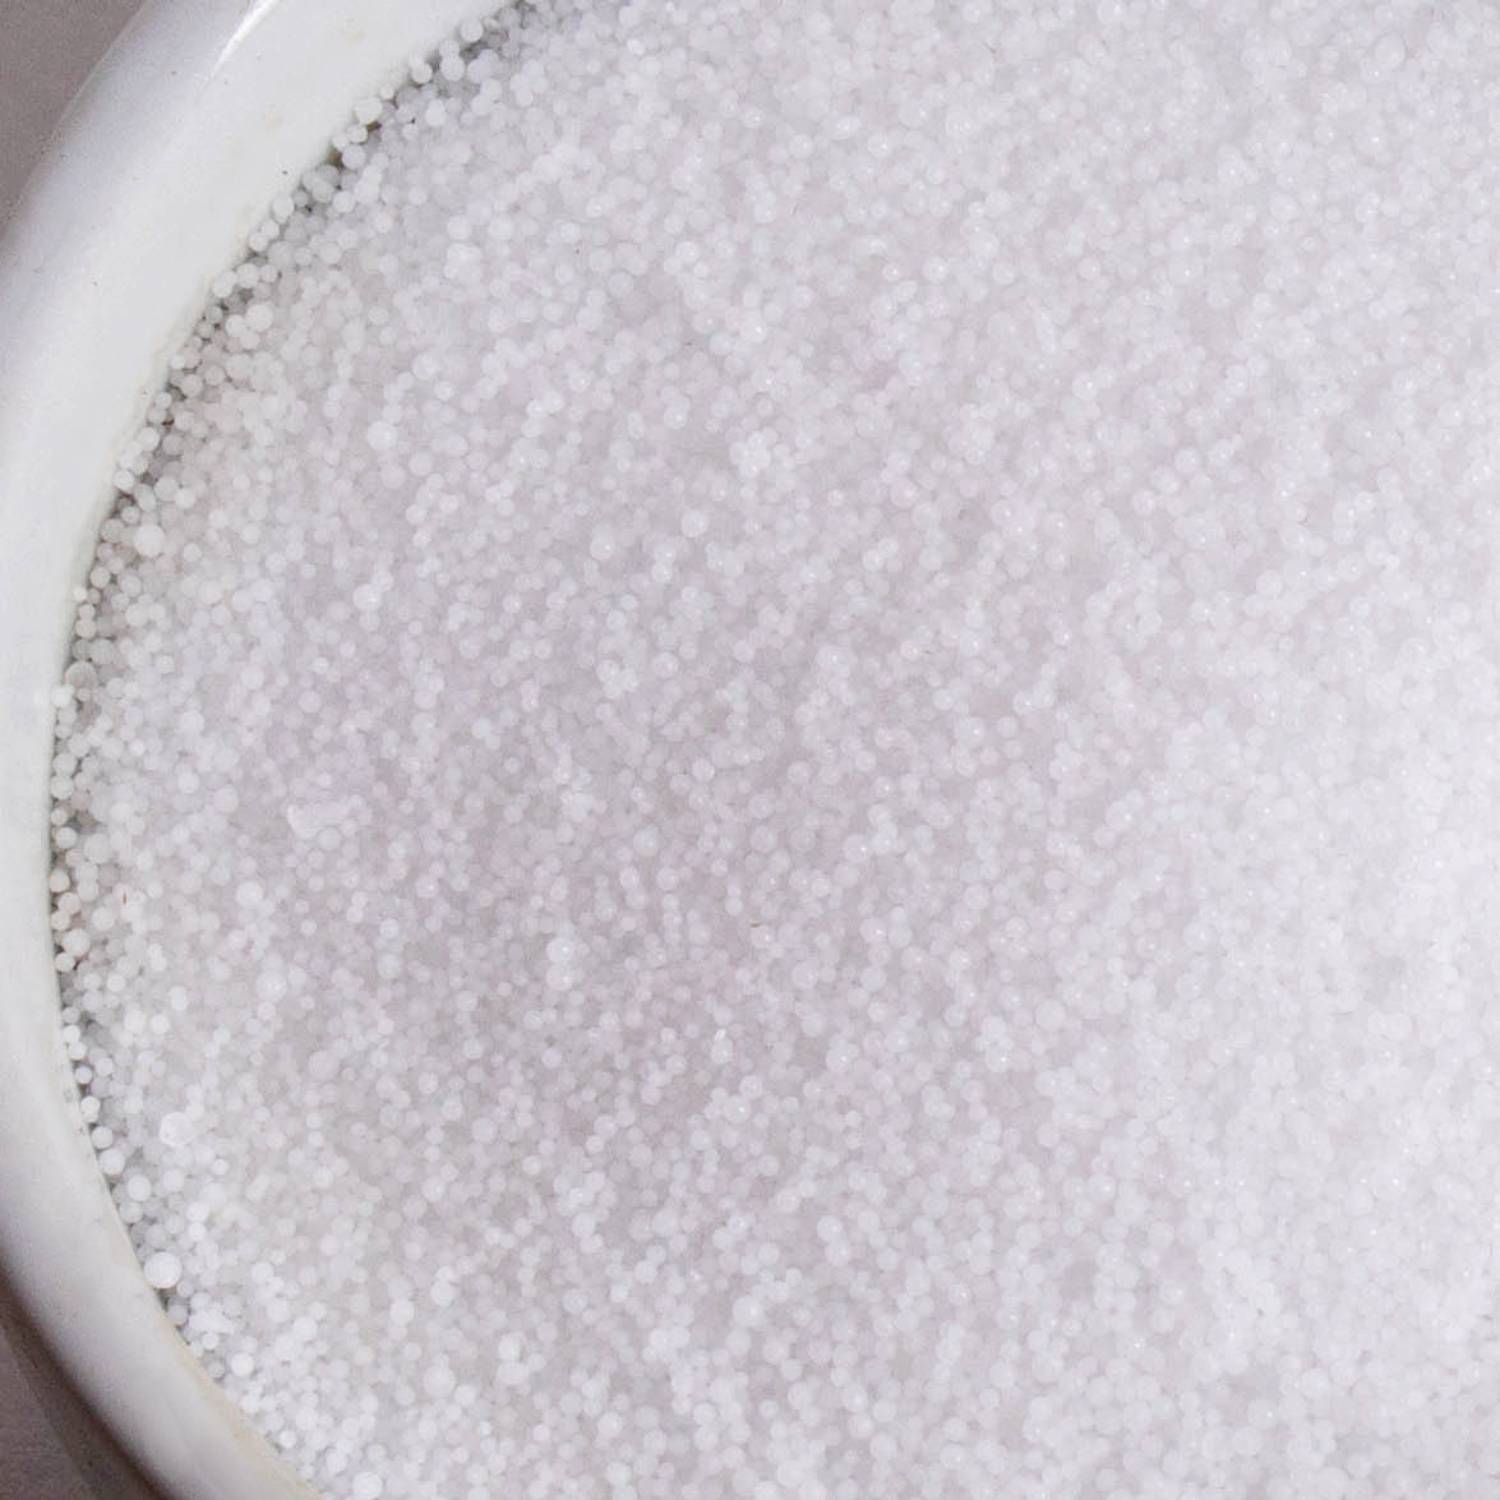 Lehman's Sodium Hydroxide for Soapmaking, Resealable Bag of Lye